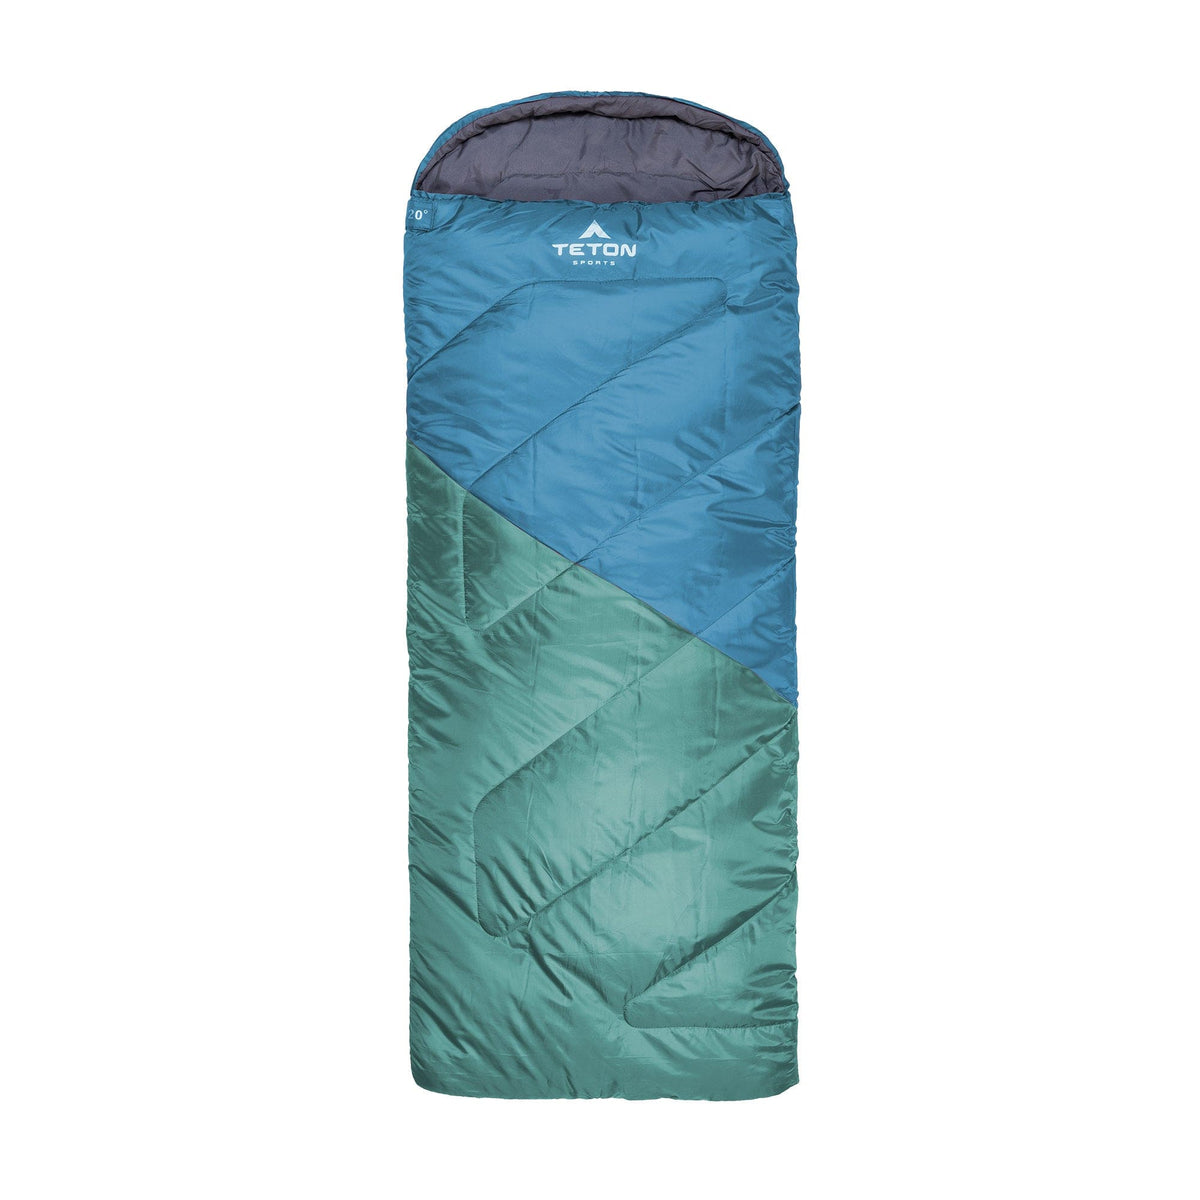 Li'l Celsius 20°F / -7°C Junior Sleeping Bag for Kids